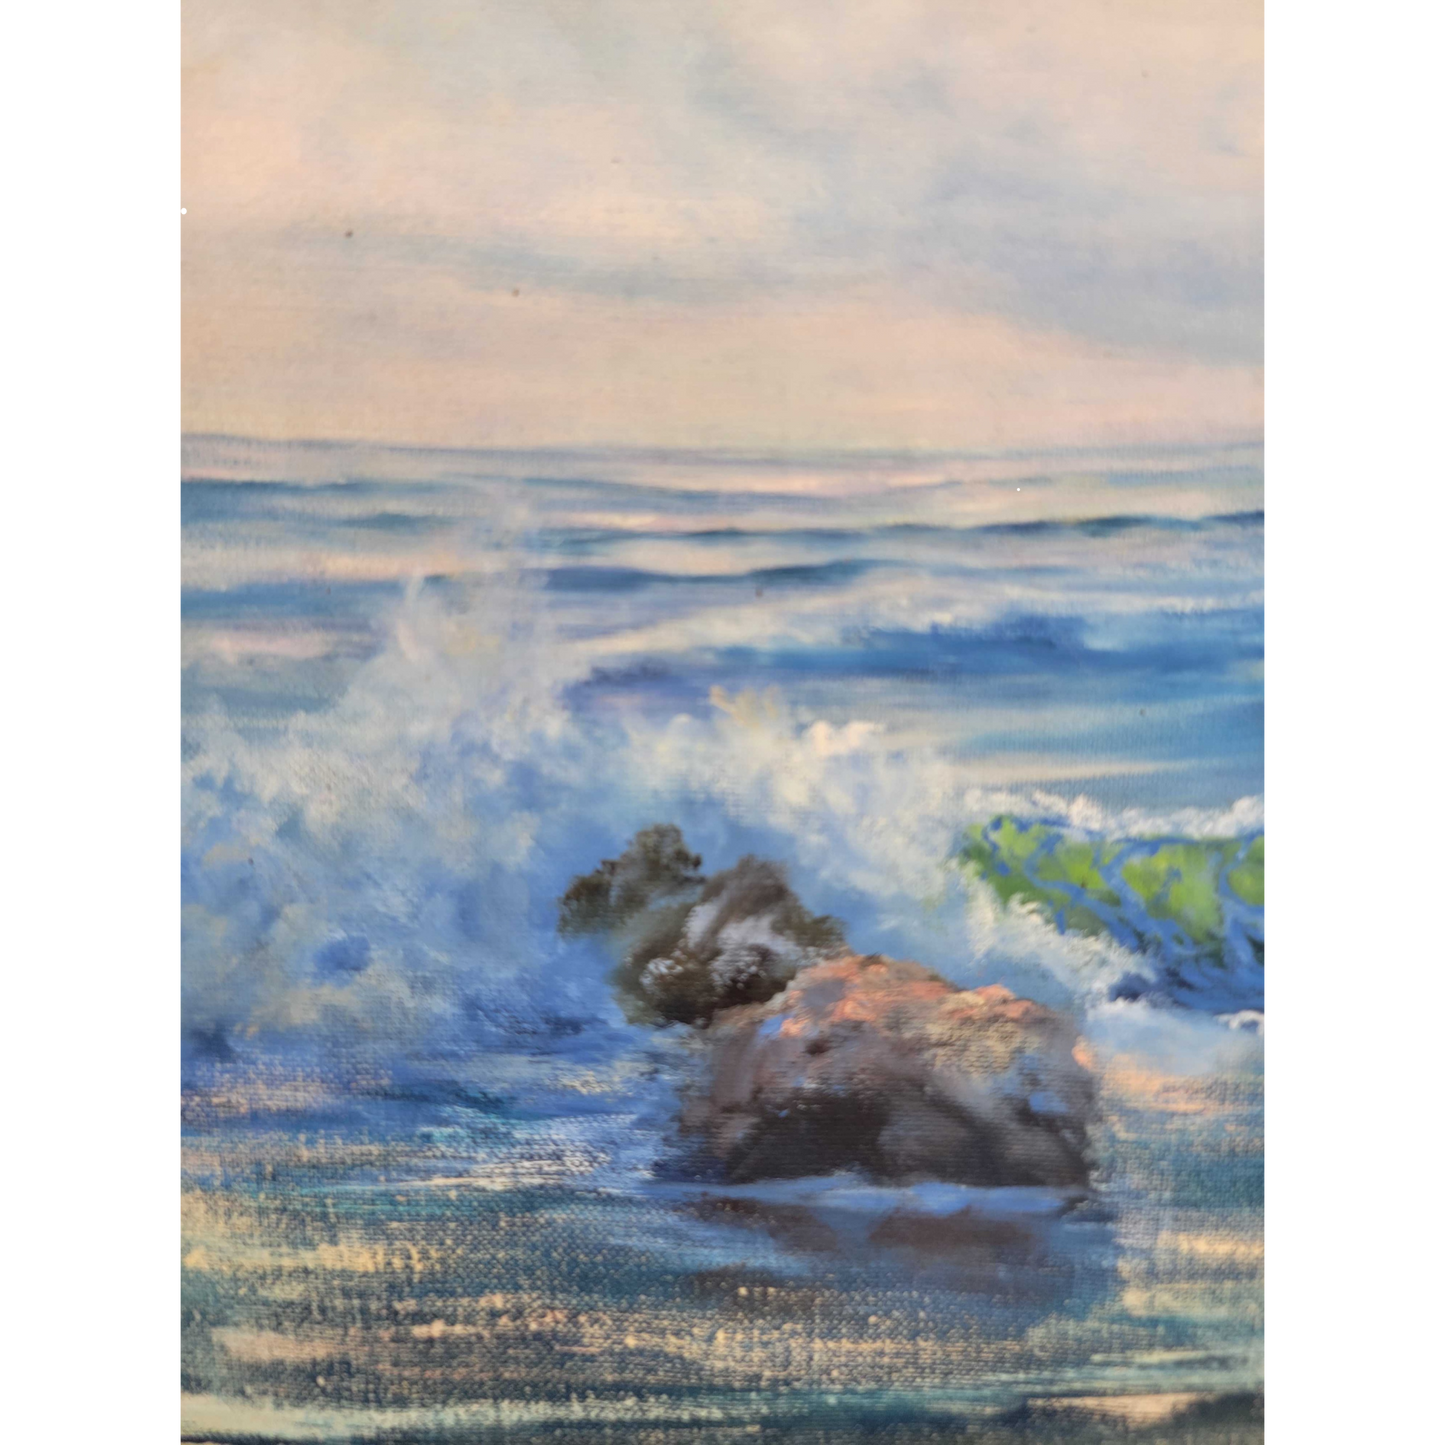 Vintage Painting Of Waves Crashing Into Rocks